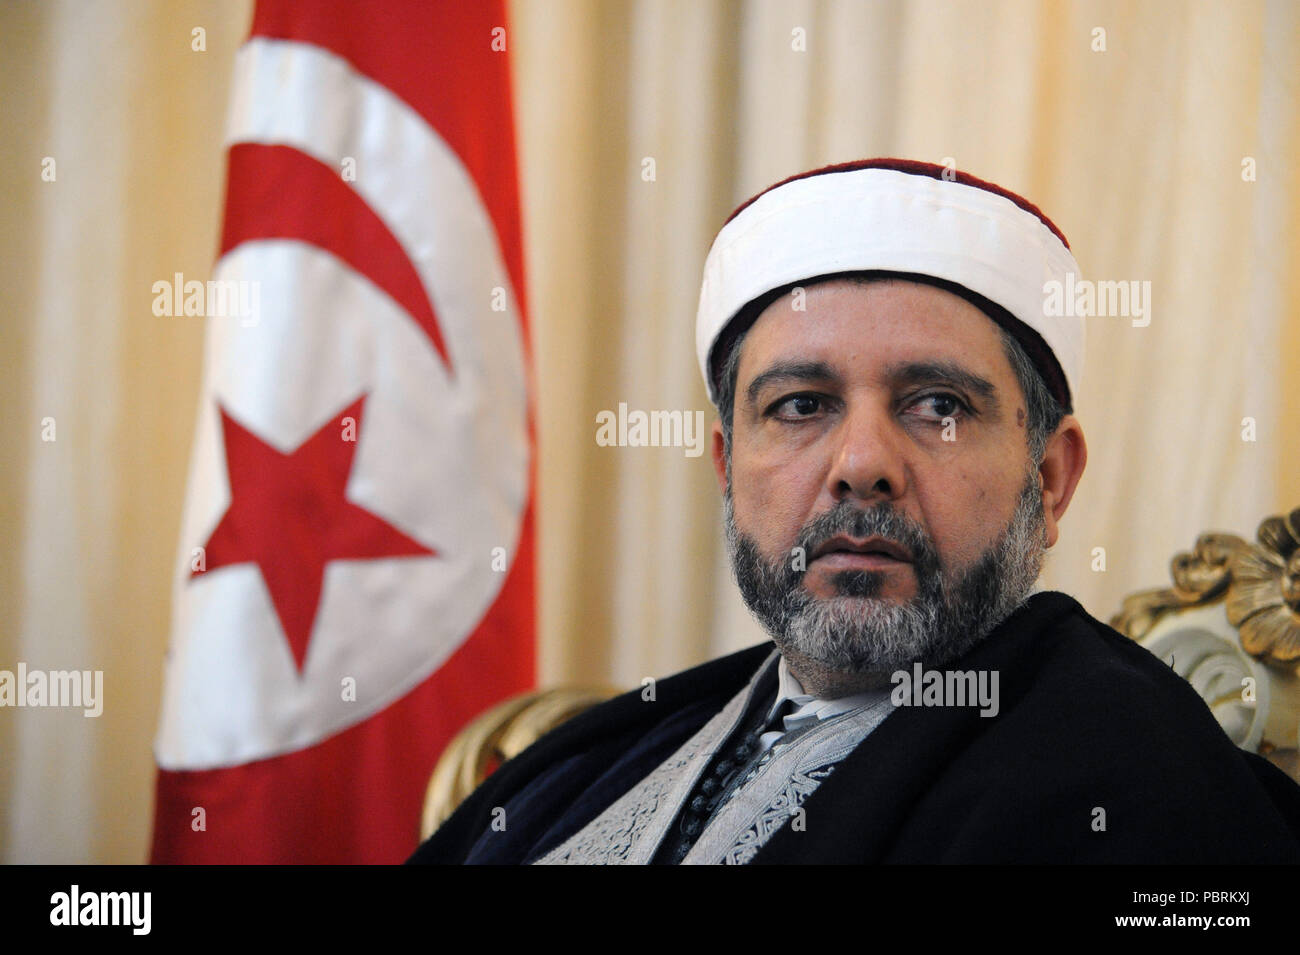 February 15, 2013 - Tunis, Tunisia: Portrait of Noureddine El Khademi, Tunisia's Minister for Religious Affairs at his office. Portrait du ministre tunisien des Affaires religieuses, Noureddine El Khademi. *** FRANCE OUT / NO SALES TO FRENCH MEDIA *** Stock Photo